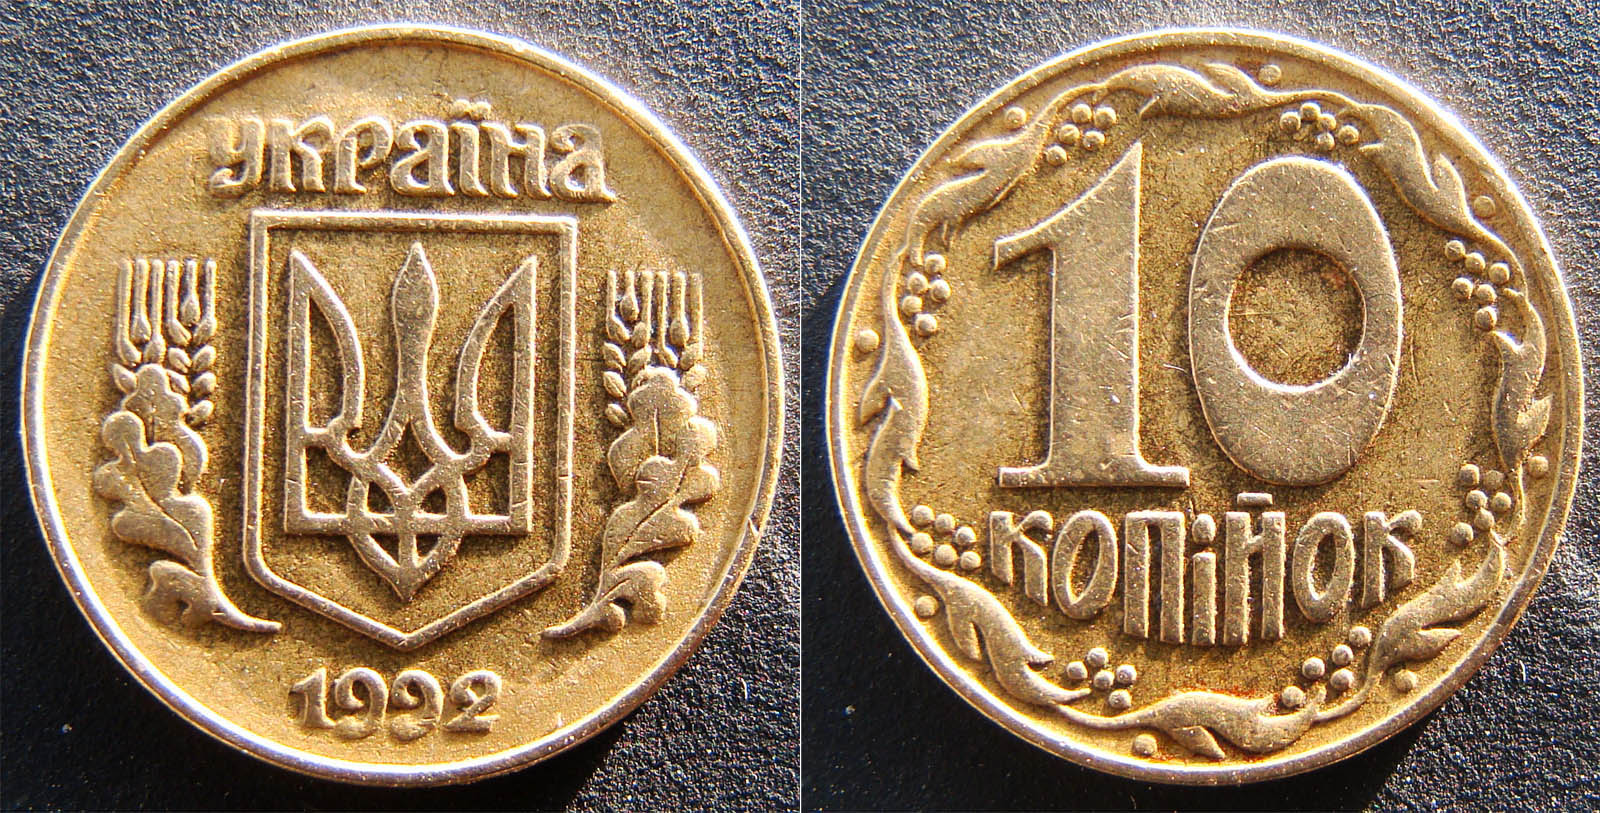 5 копеек 1992 украина. Украина монета 10 копеек 1992. Монета 10 копеек Украина 1992 год. 10 Копеек 1992 года. Украинская копейка монета.